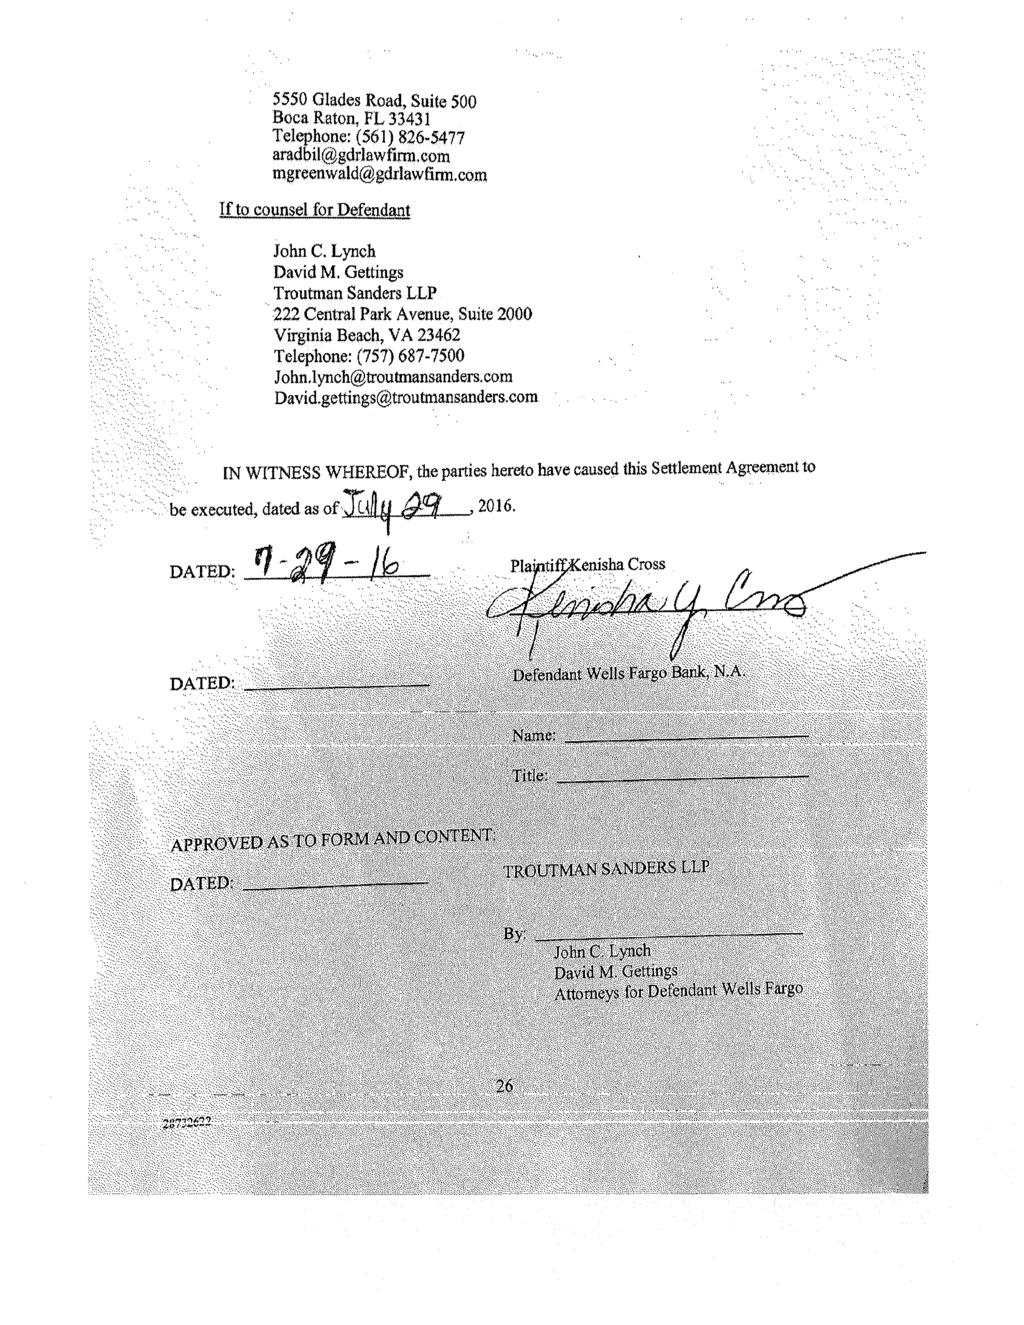 Case 1:15-cv-01270-RWS Document